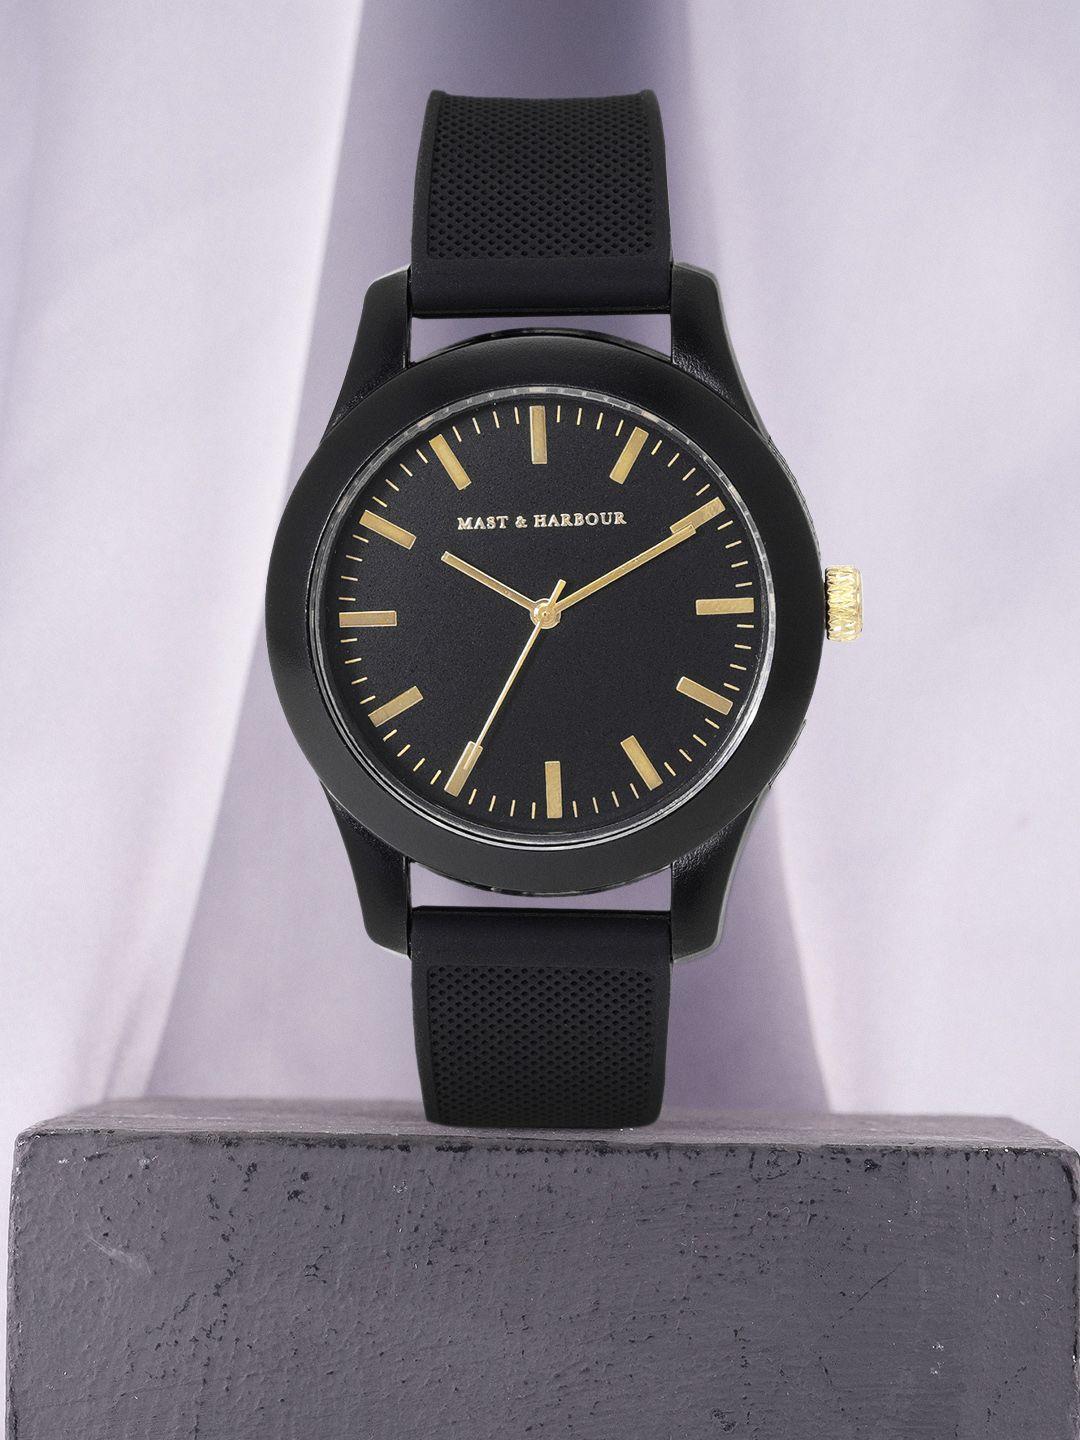 mast & harbour unisex black analogue watch mfb-pn-sm-32-913